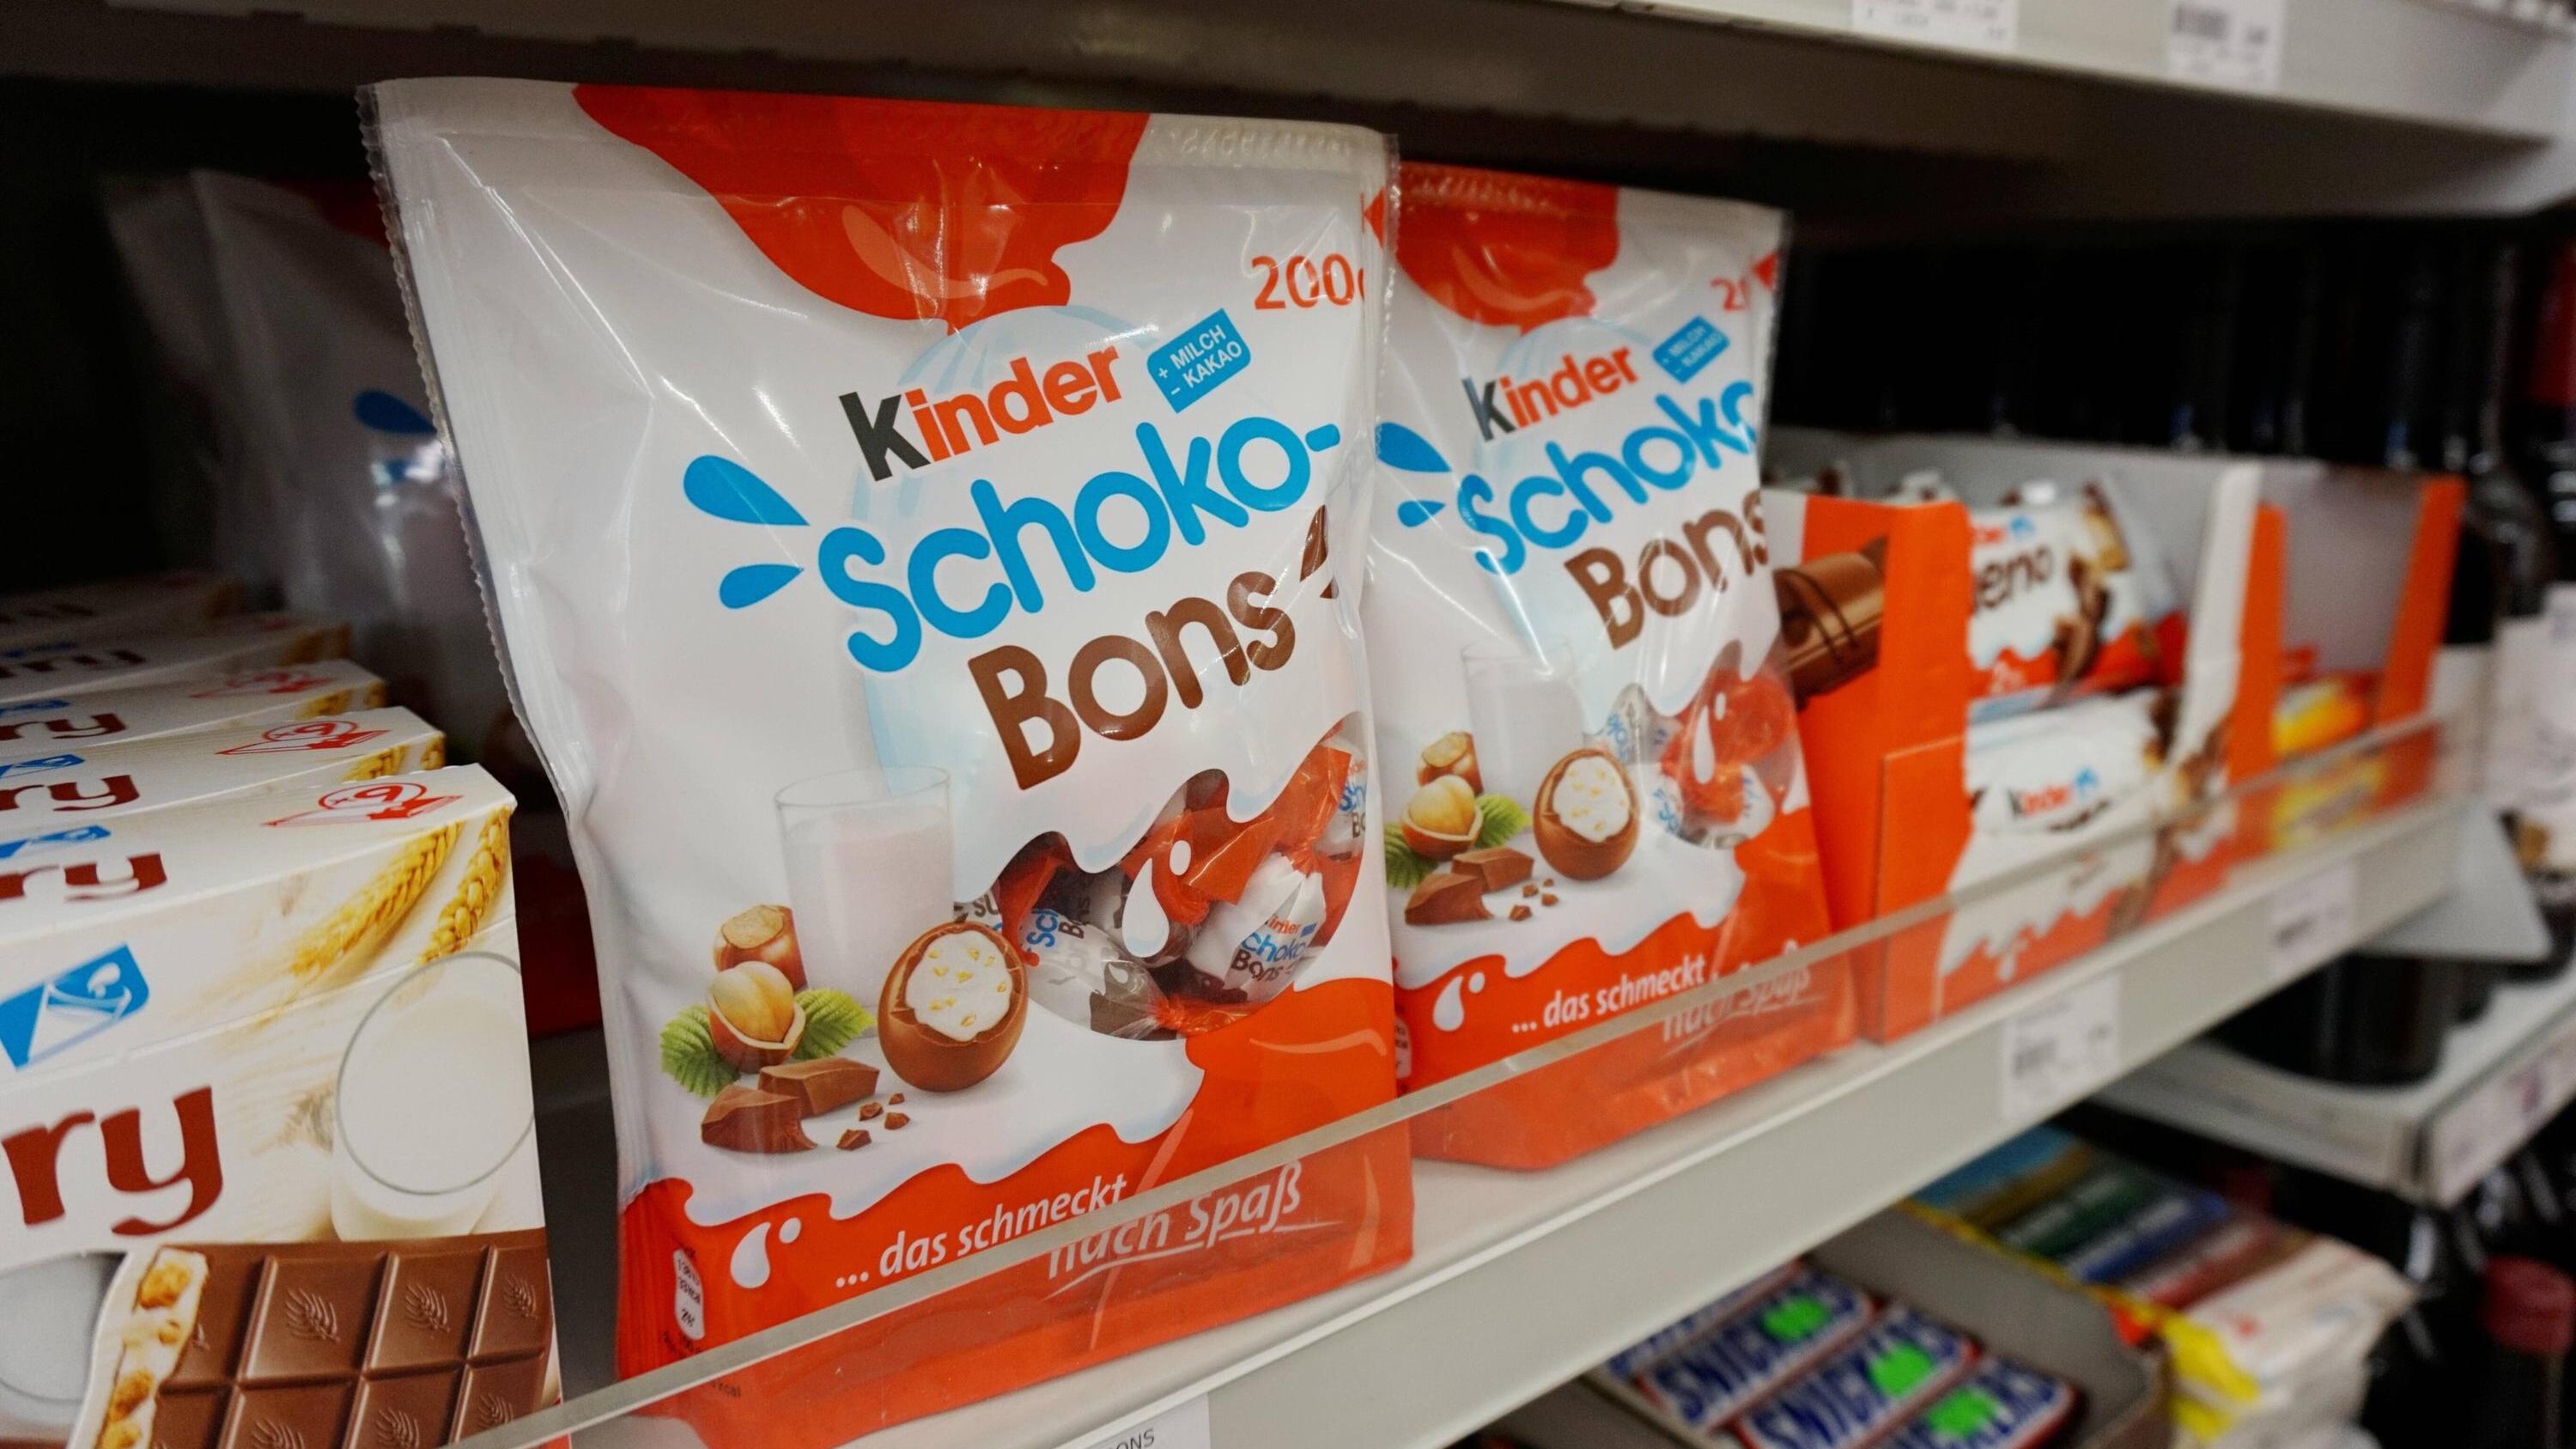 Kinder Schoko Bons 320g